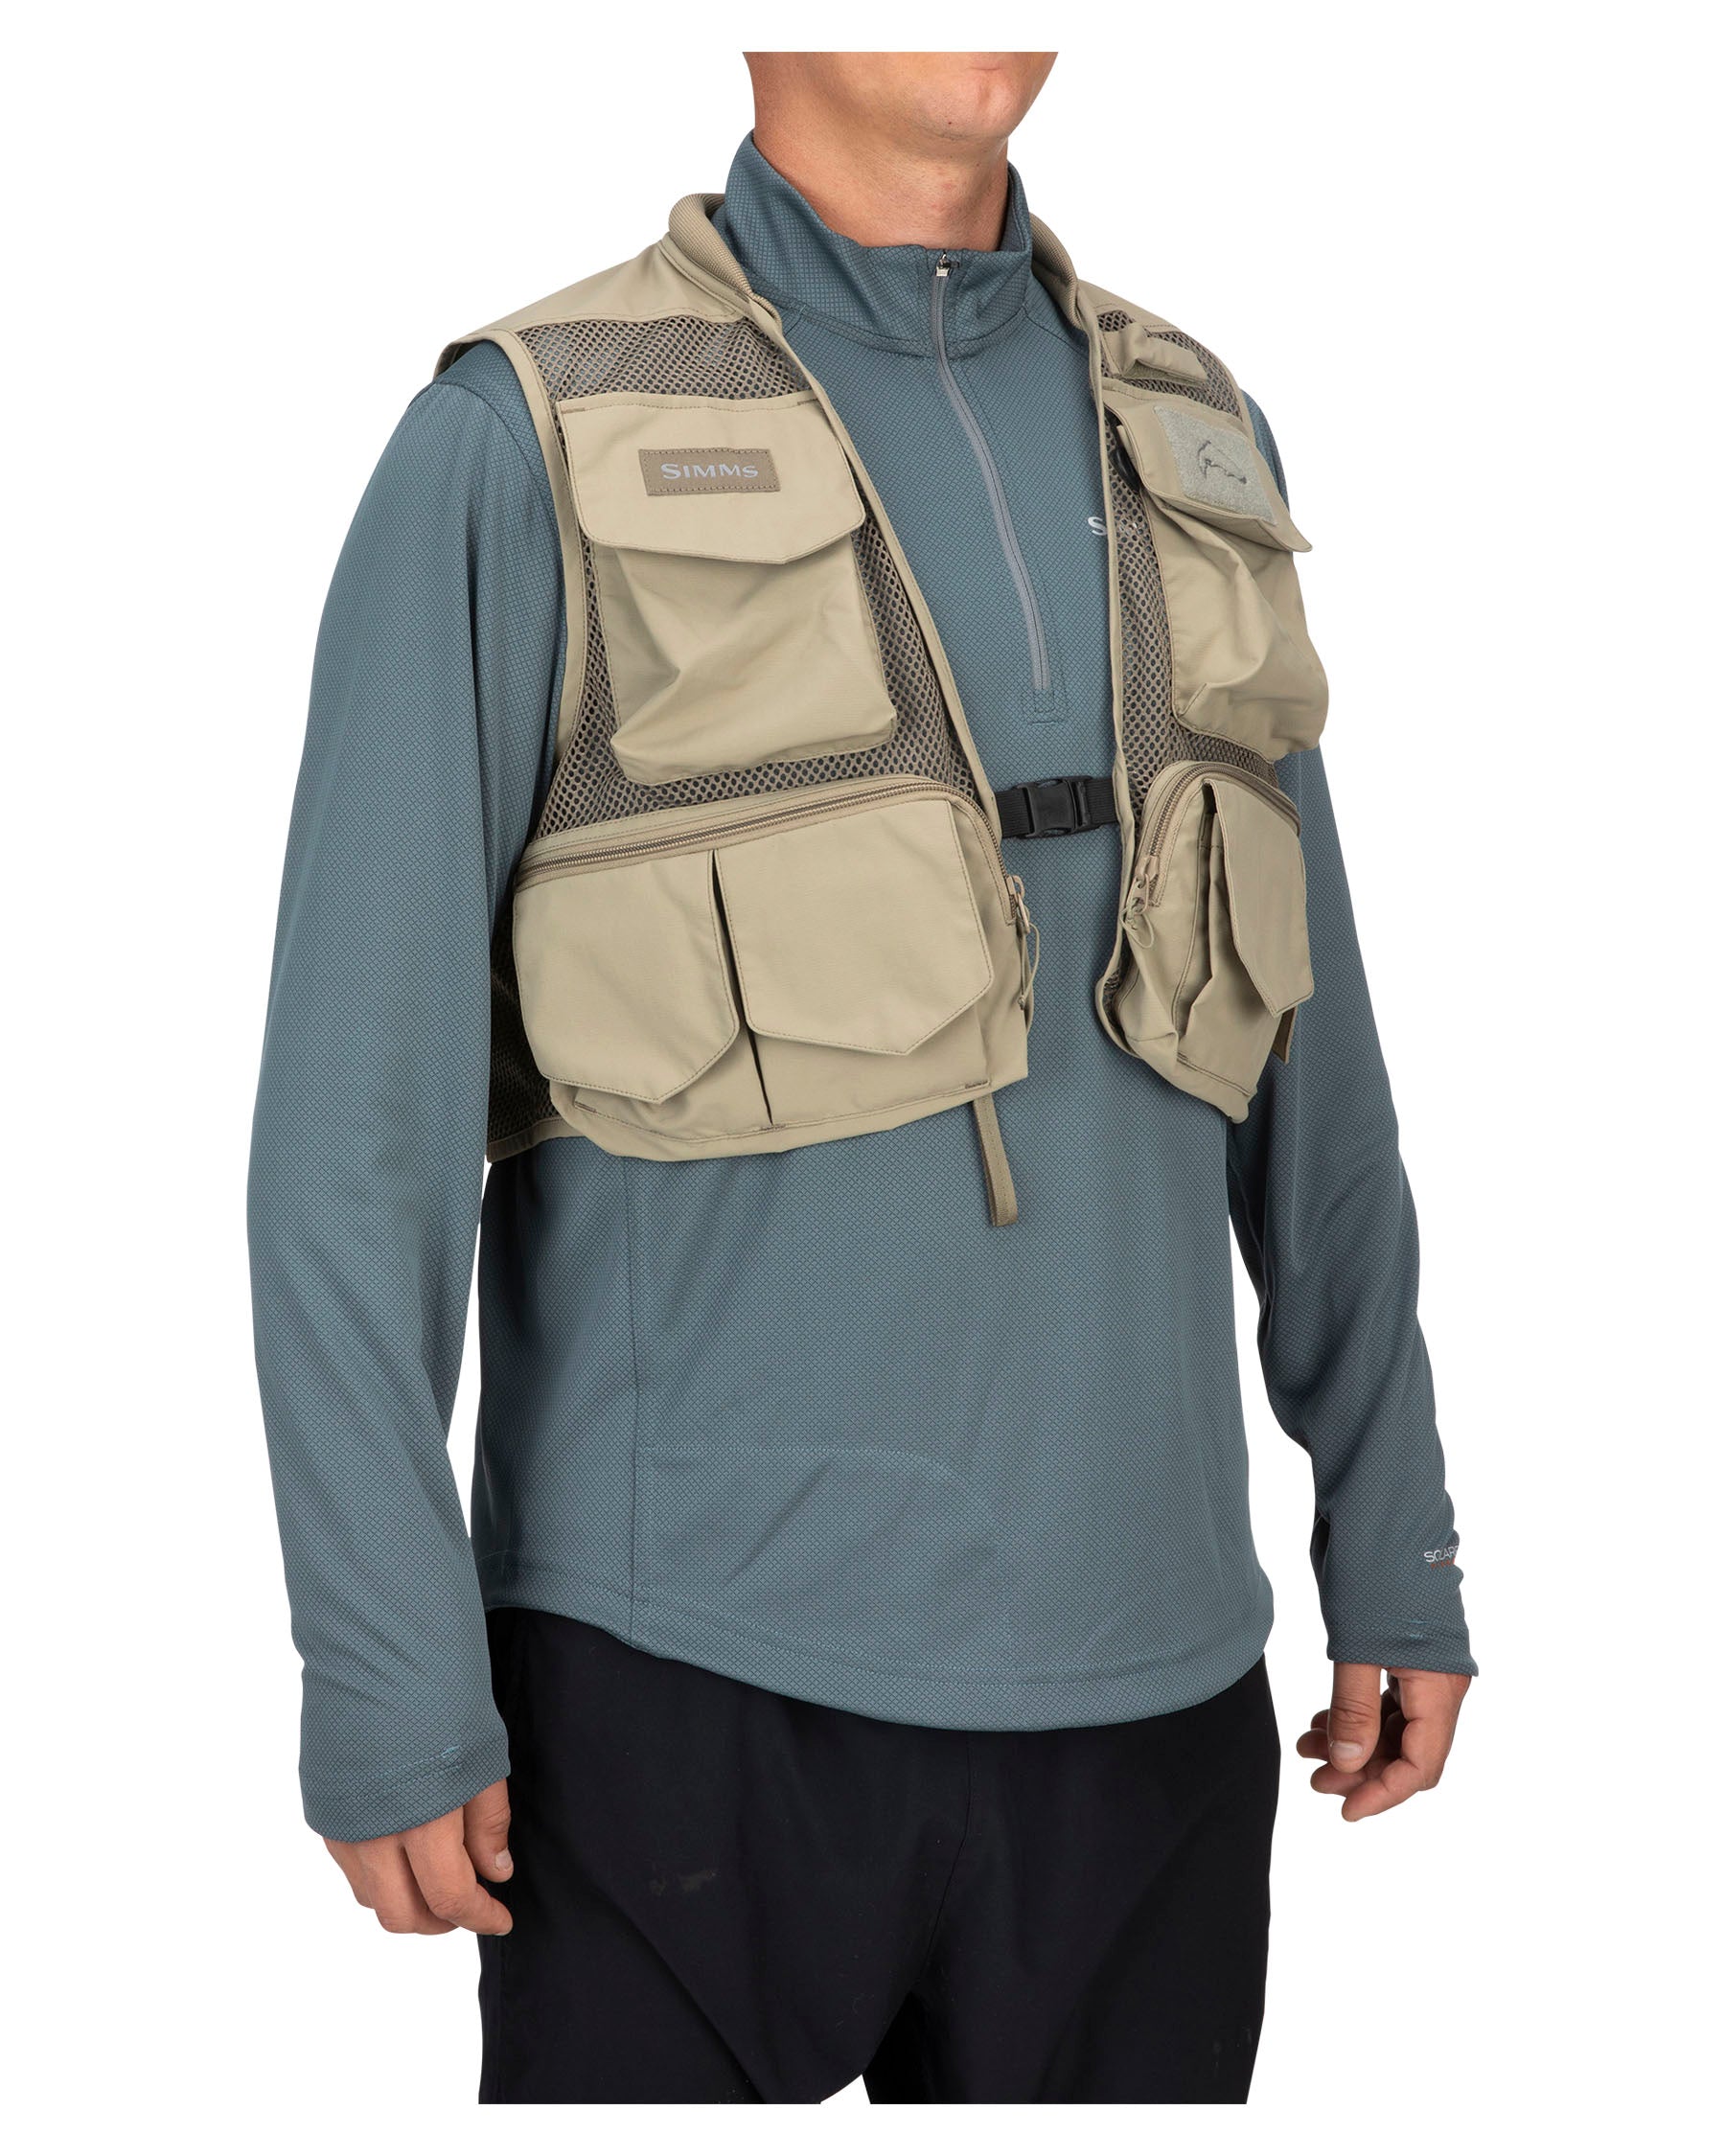 Tributary Fishing Vest